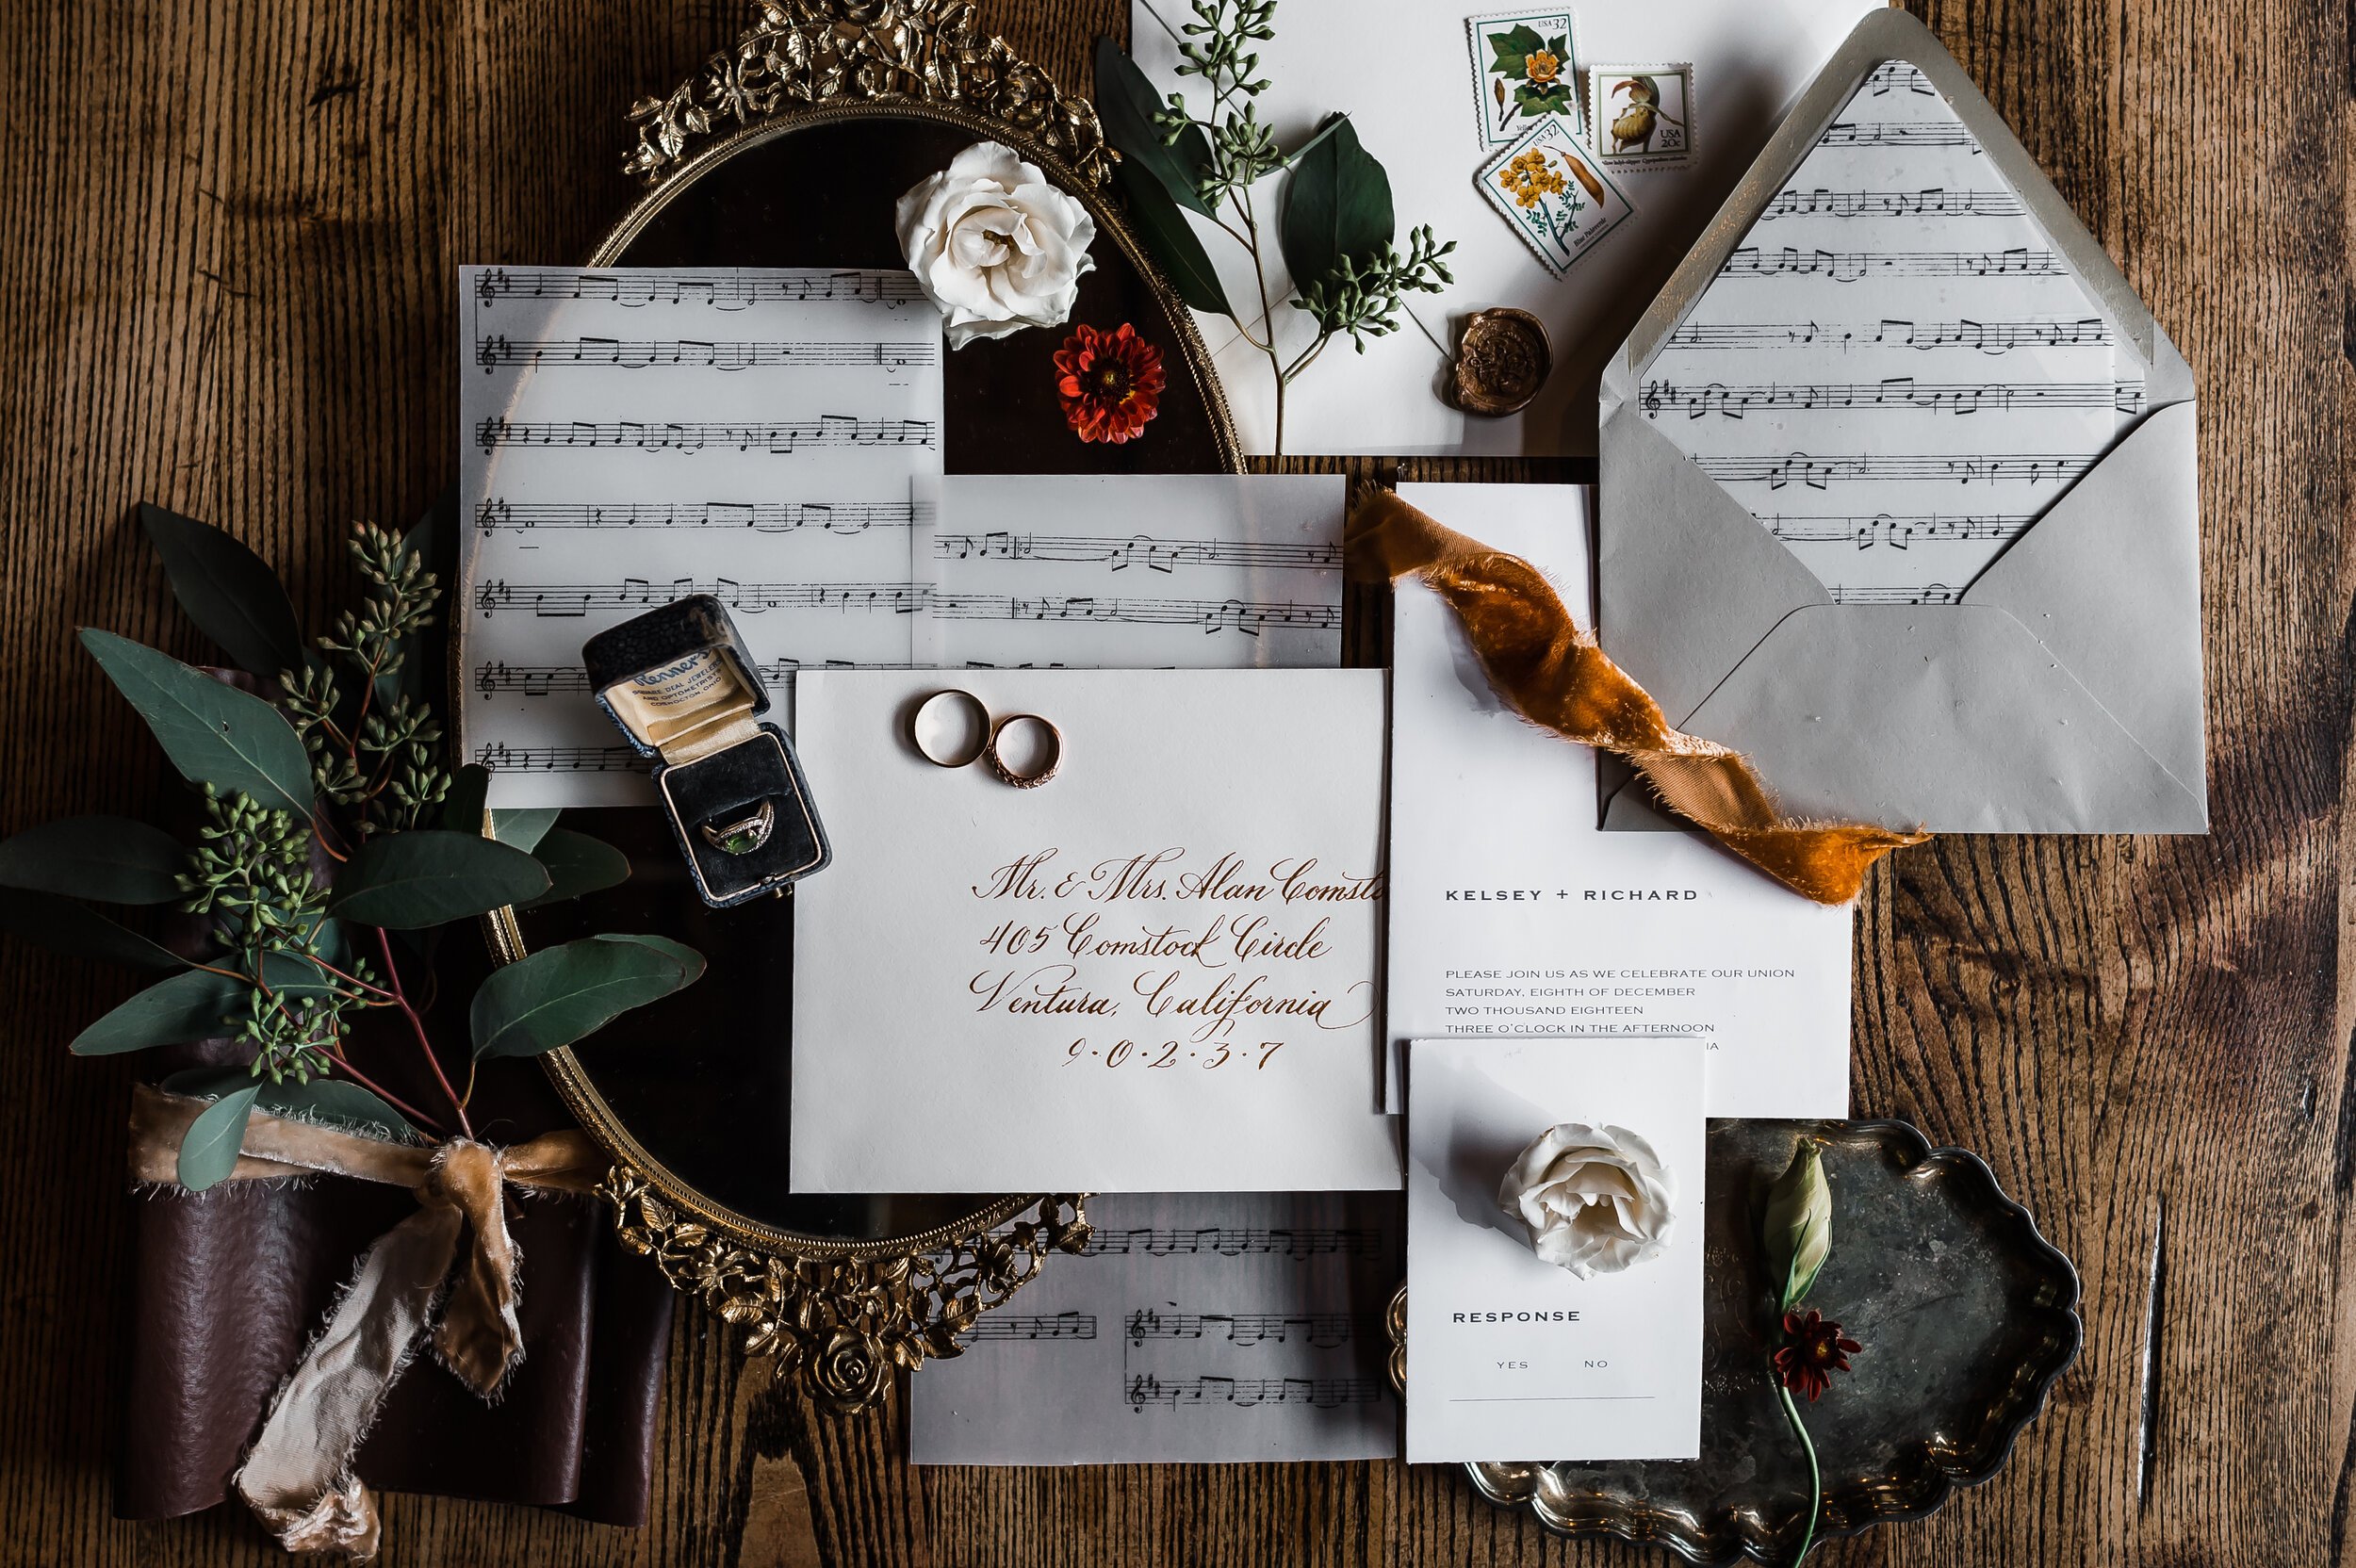 www.santabarbarawedding.com | Cafe Fiore | Michelle Ramirez | Simply S Events | Curated Behavior | Tangled Lotus | Kristina Virtue Designs | Honey Silks Co. | Wedding Invites and Florals